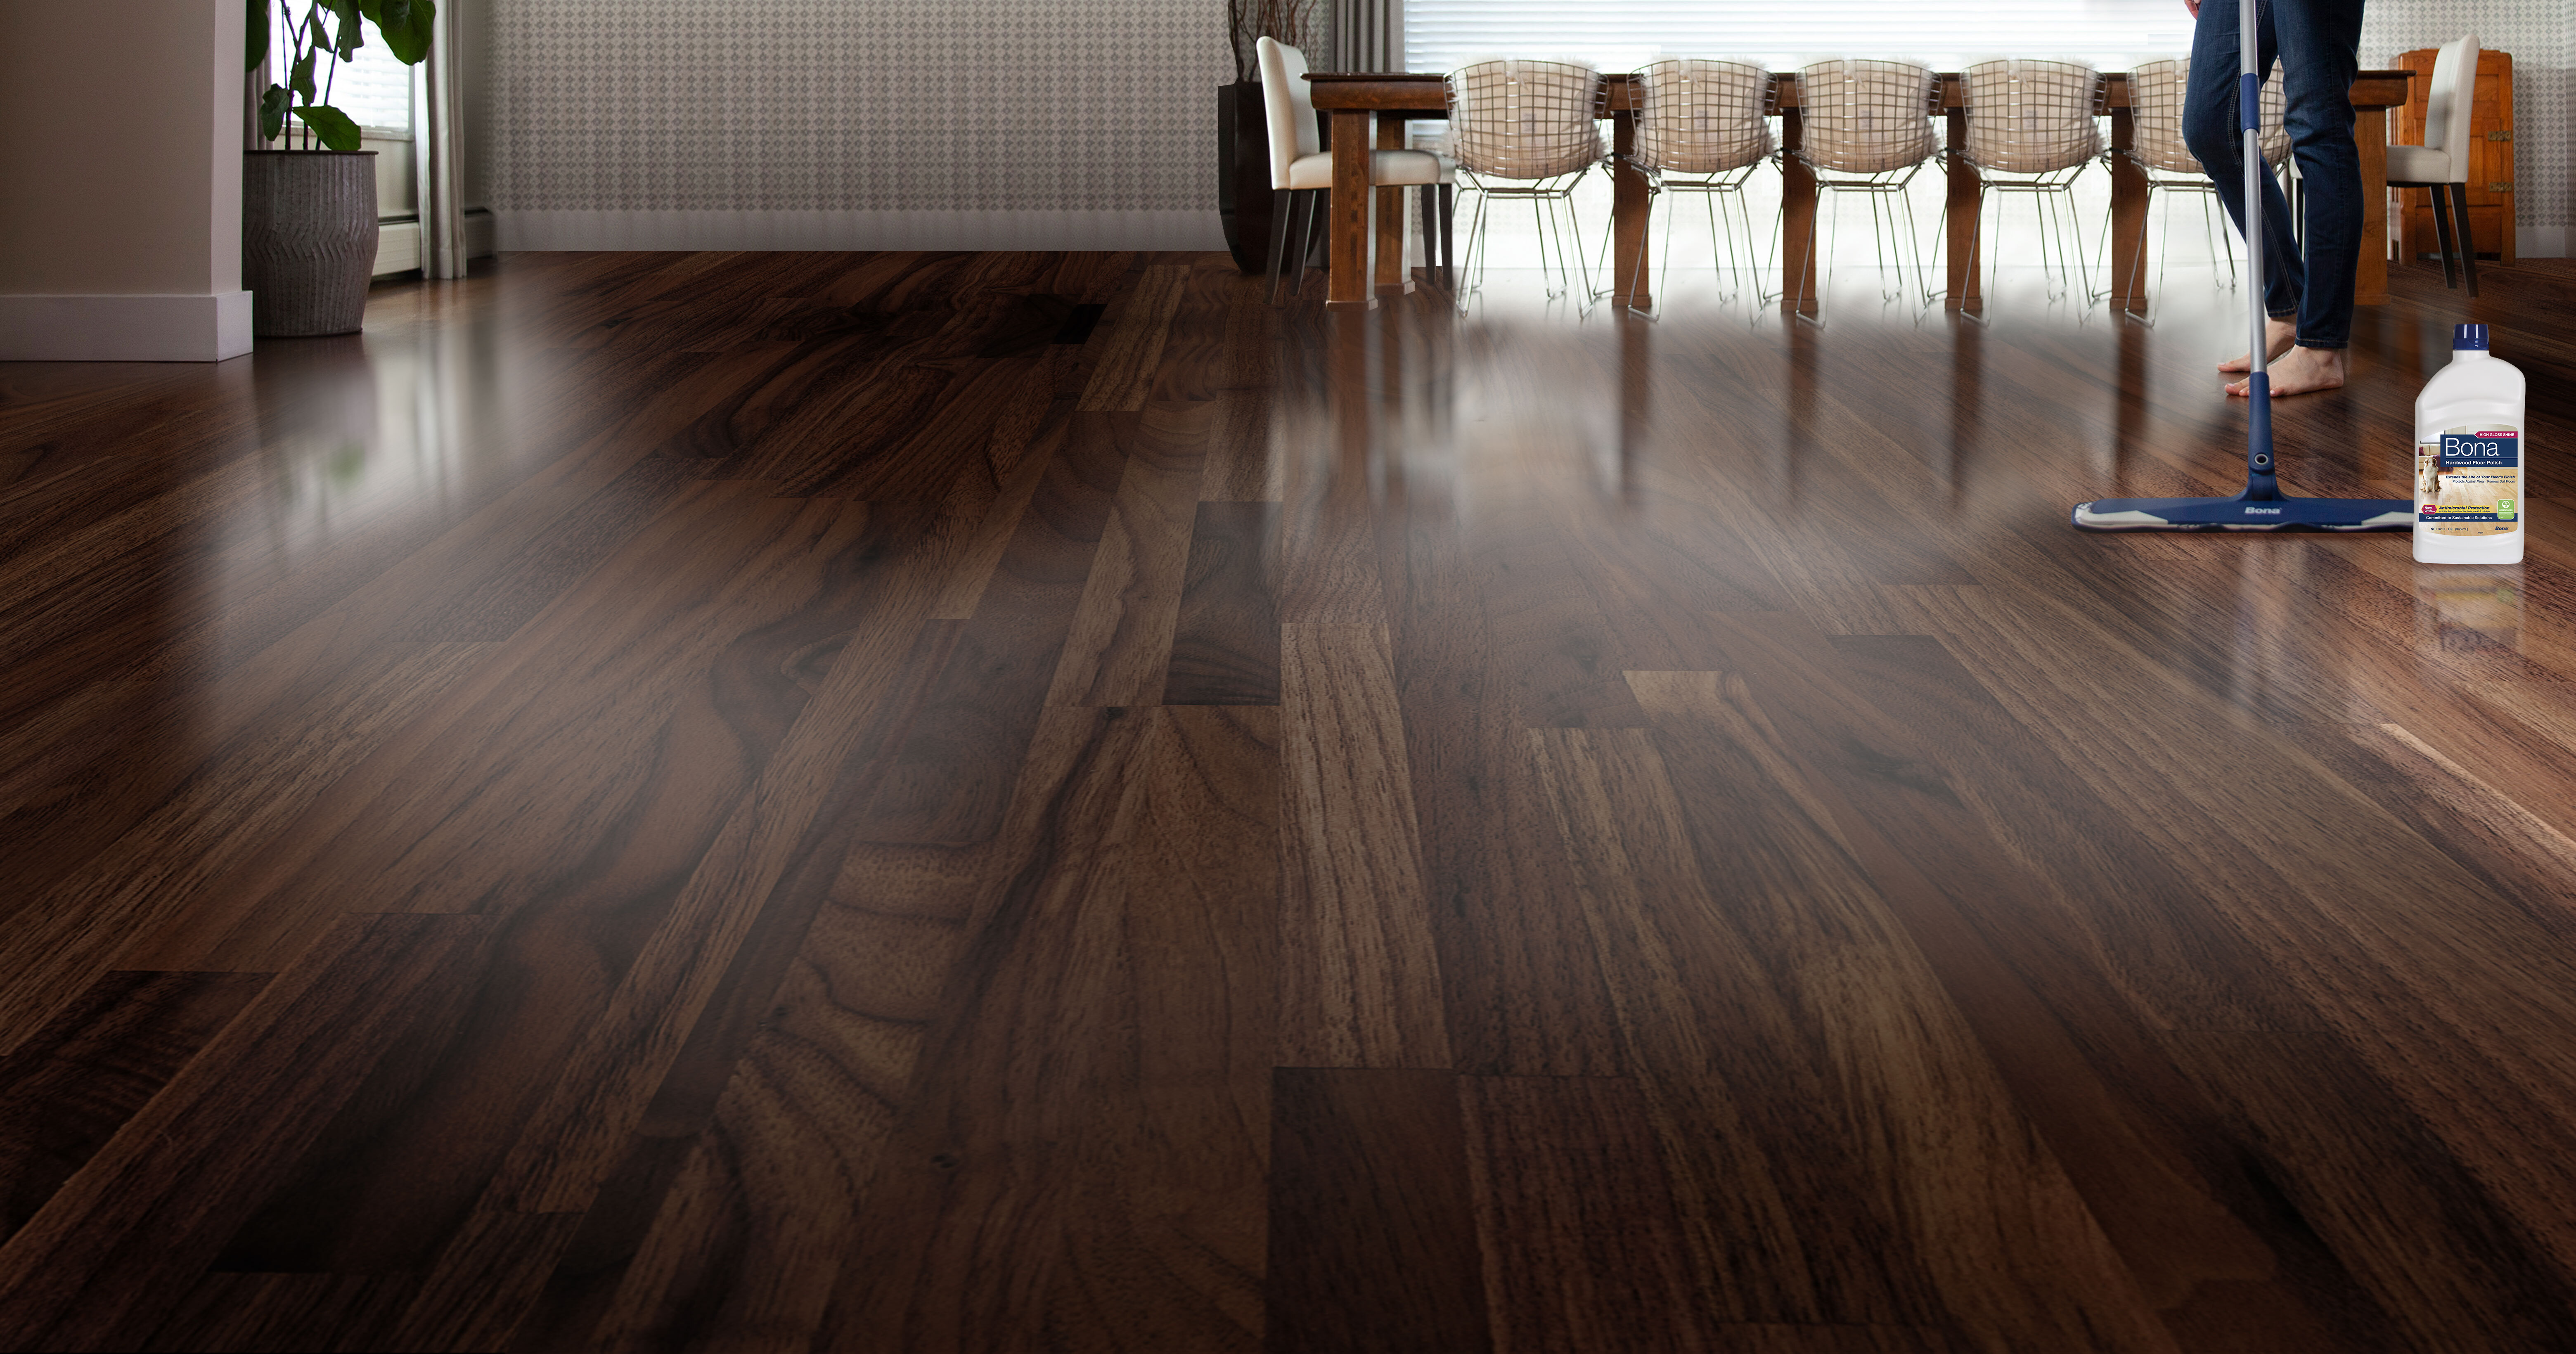 How To Polish Hardwood Floors Do S And, How To Clean Mohawk Hardwood Floors